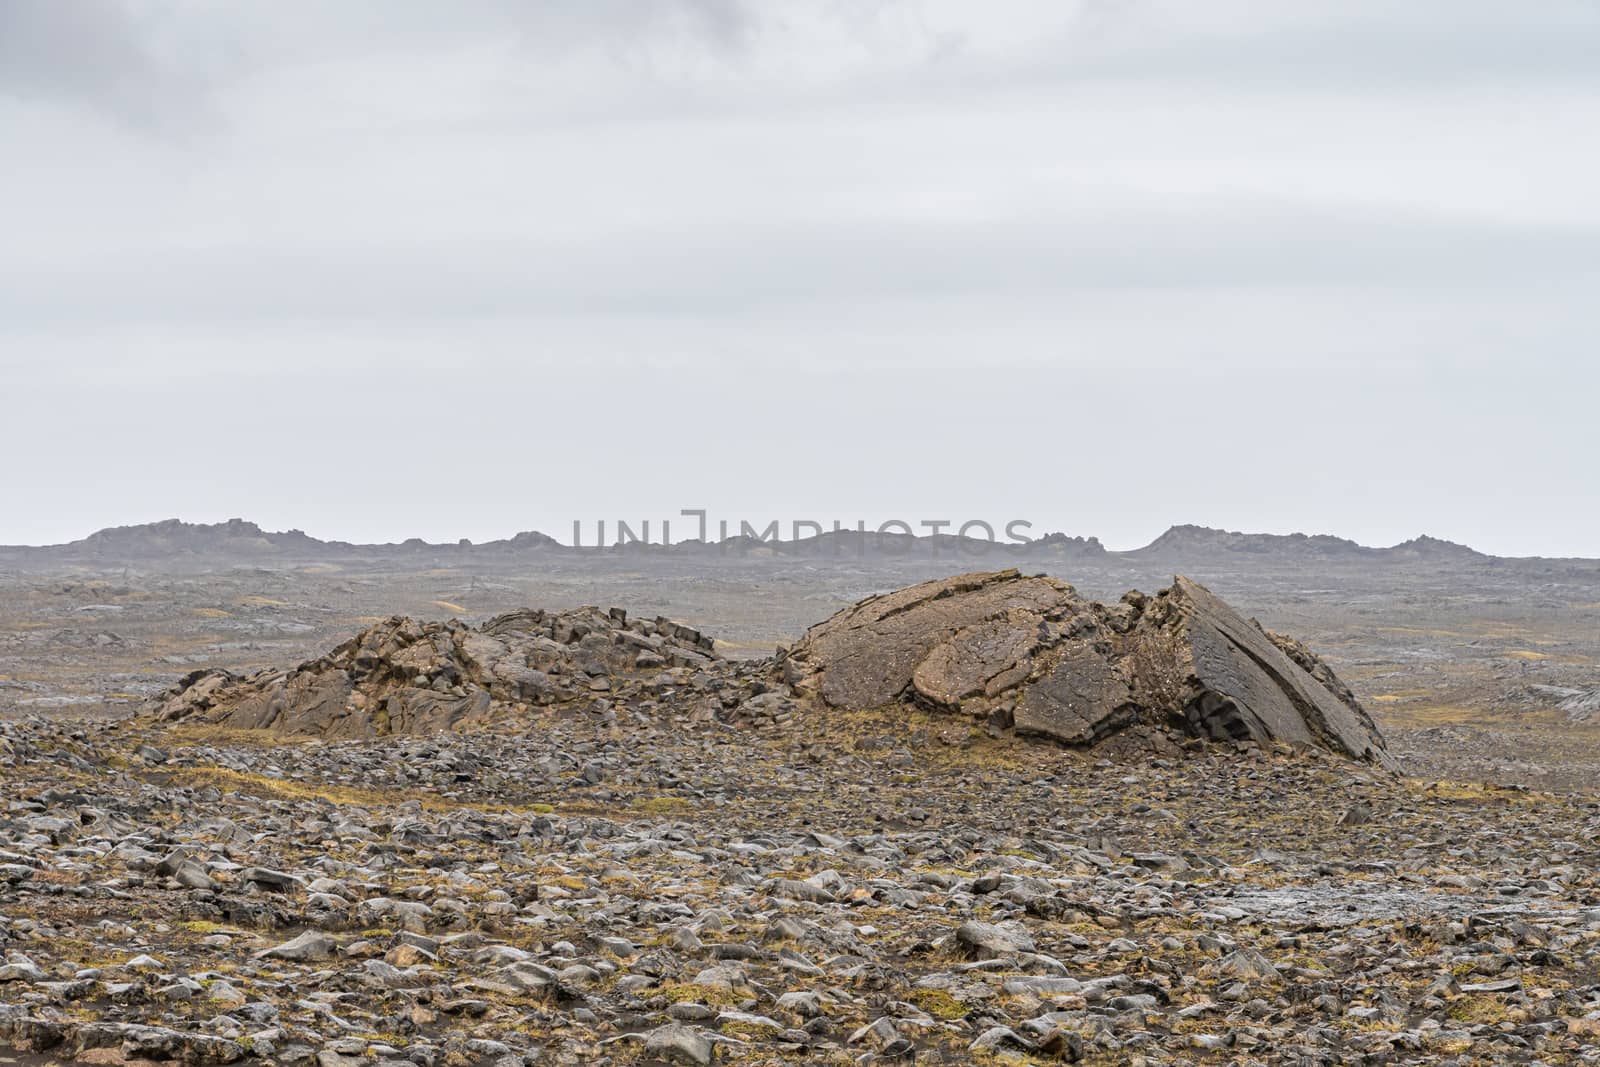 Bridge between continents in Iceland volcanic rock pushing upwards breaking apart by MXW_Stock